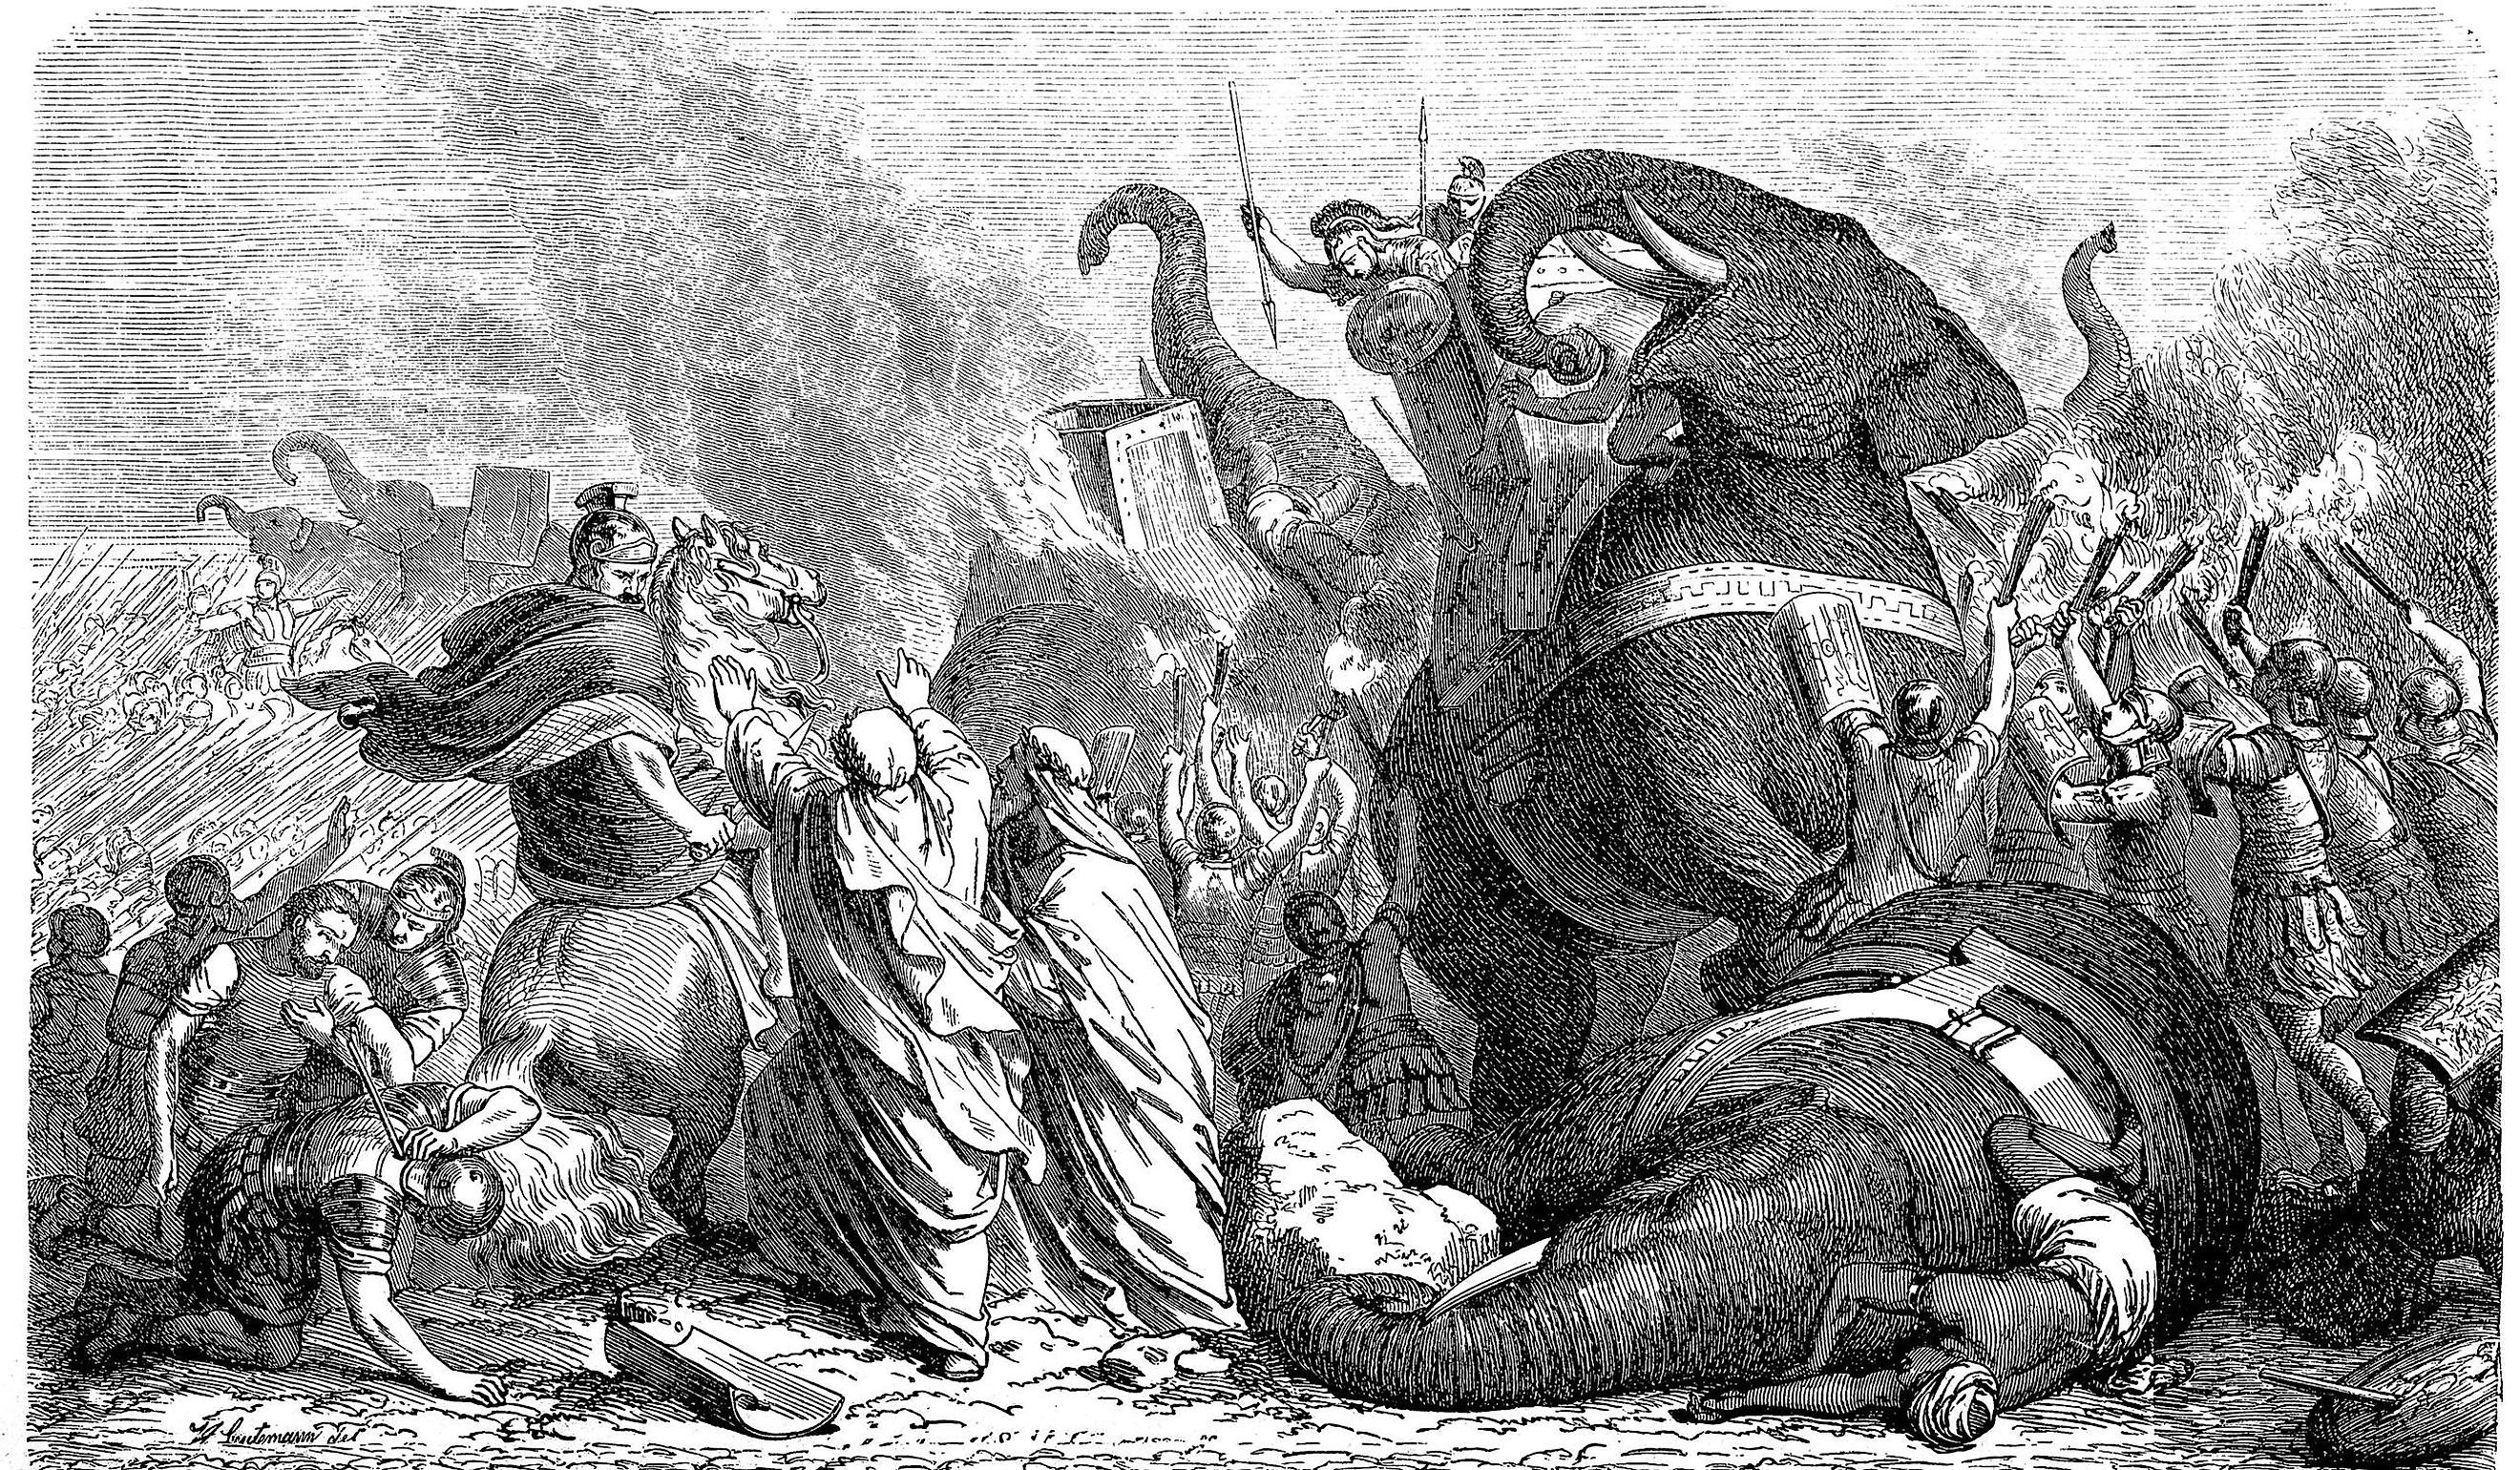 The war elephants of Pyrrhus at the battle of Asculum, 279 B.C. (Pyrrhic victory). Credit: Nastasic (https://www.istockphoto.com/portfolio/Nastasic?mediatype=illustration)